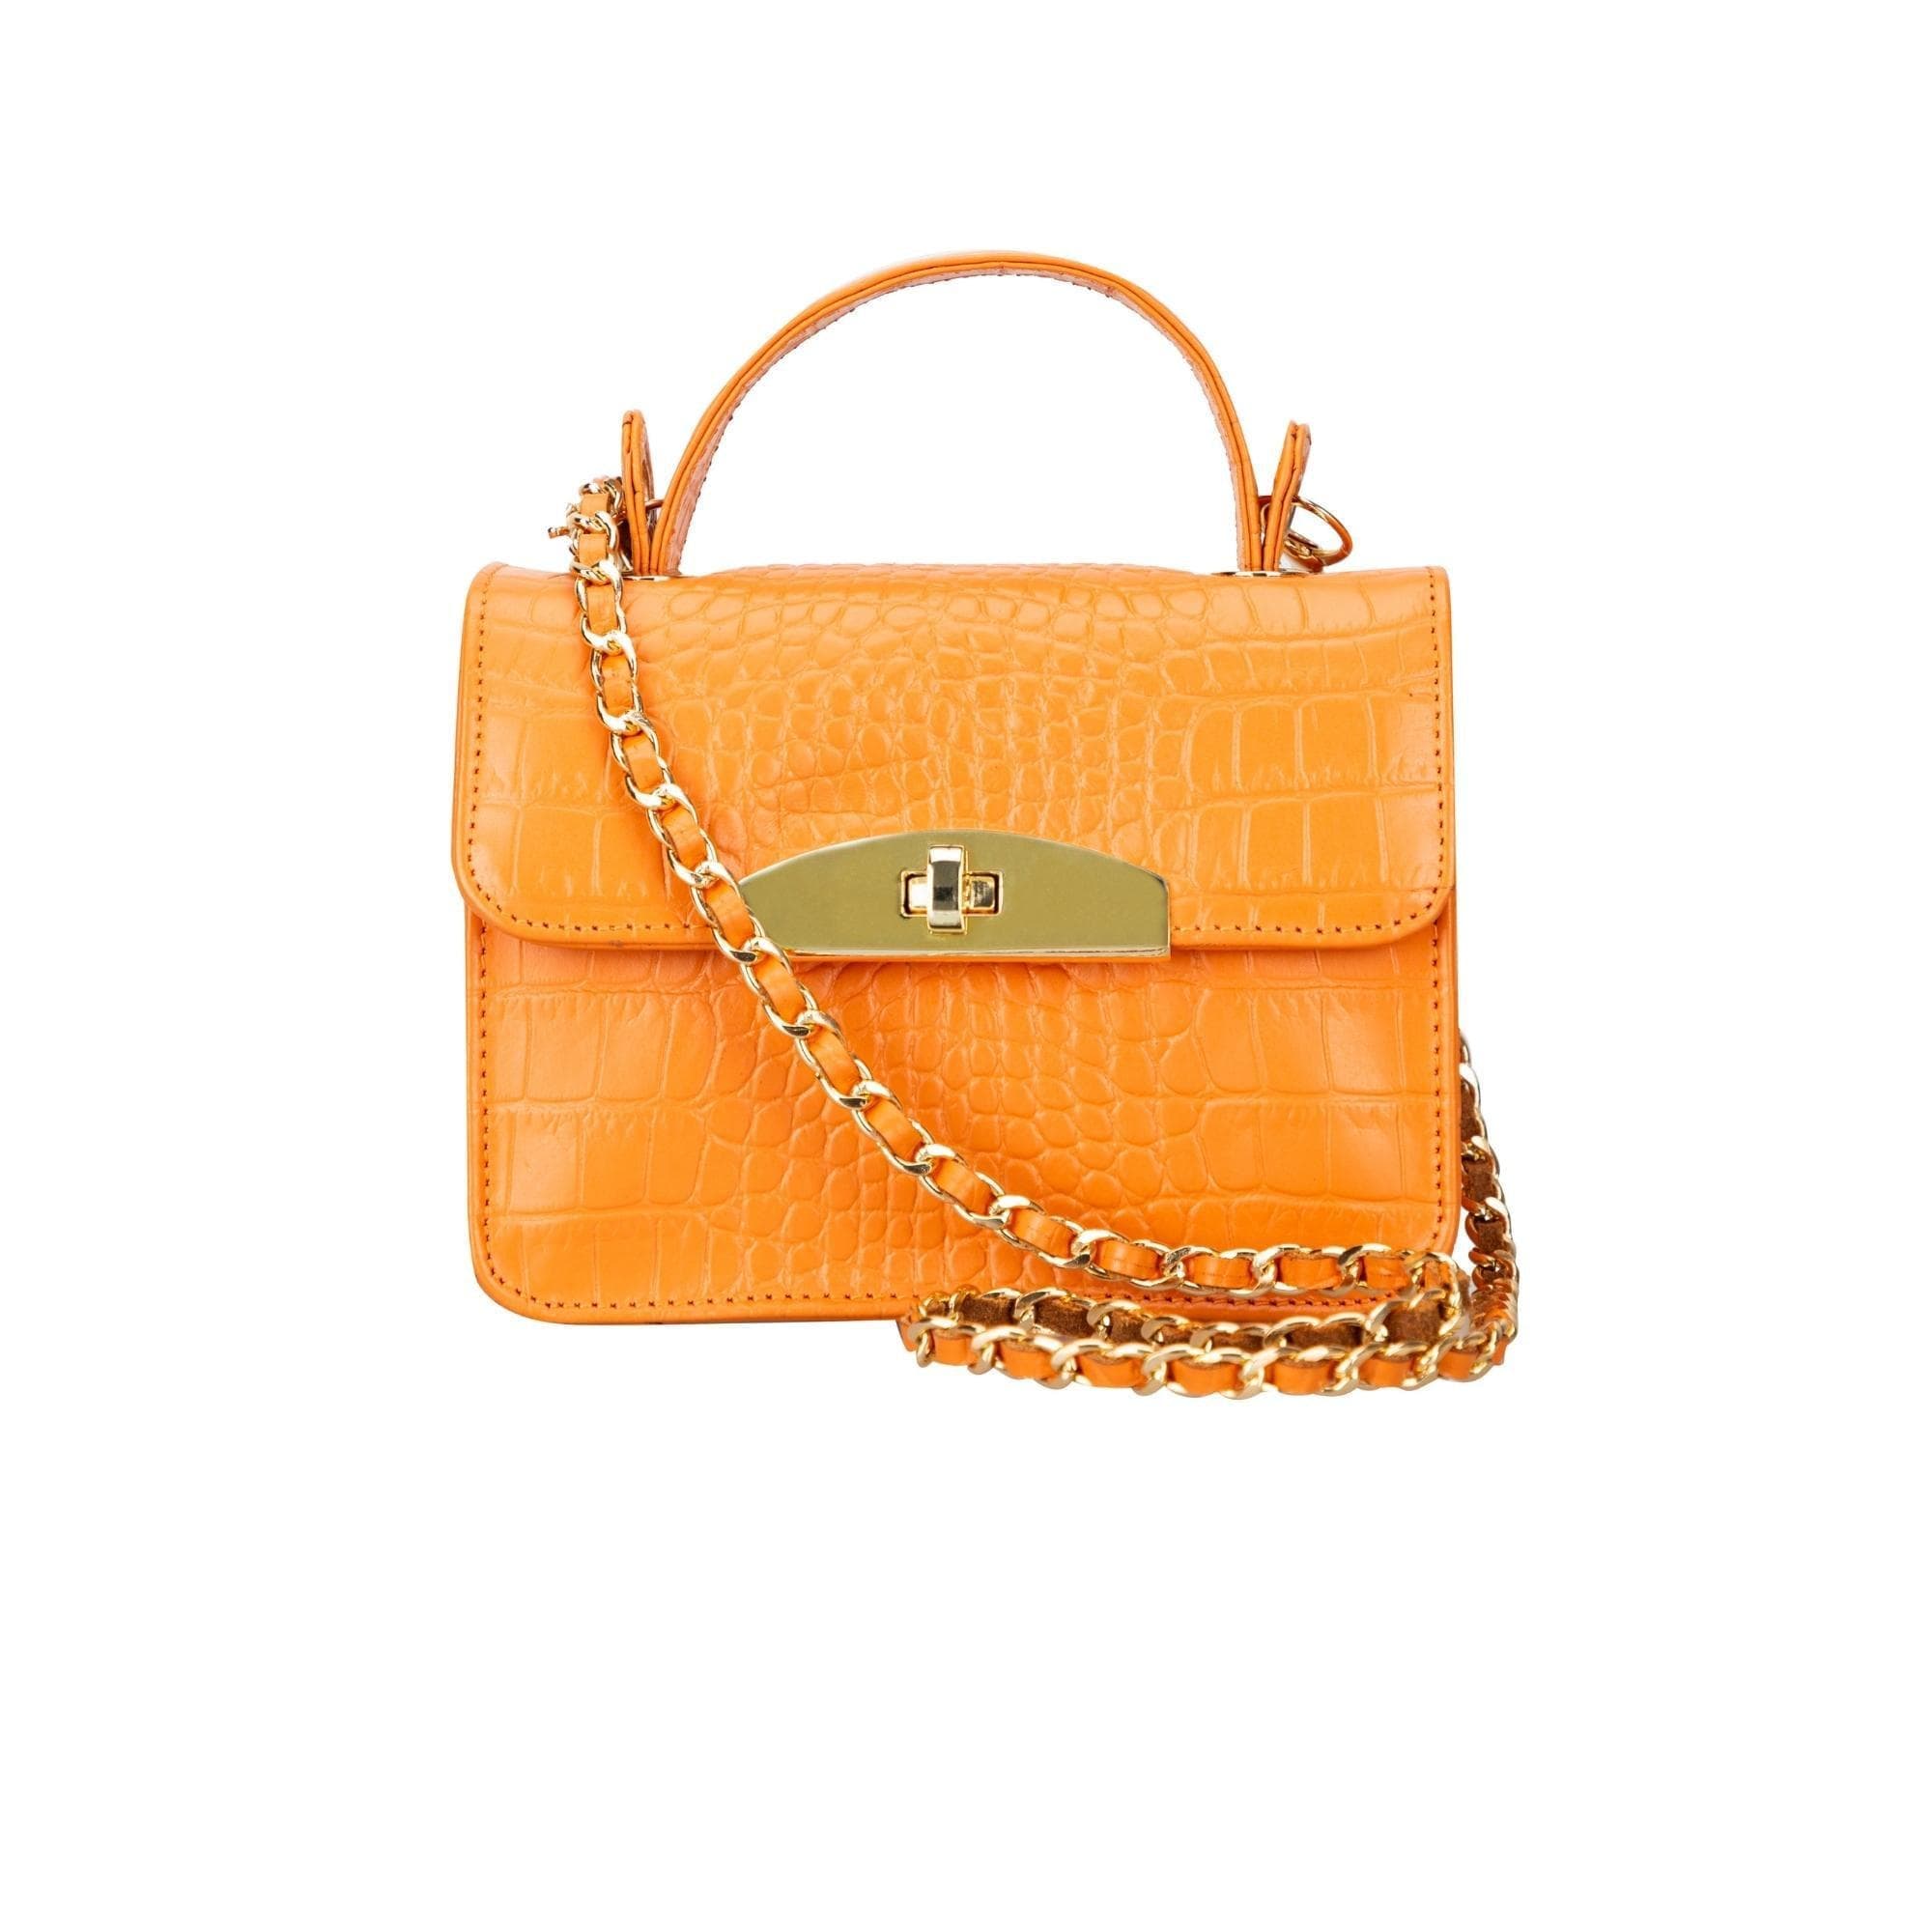 Alisha Geniune Leather Women’s Bag Orange Croc Bouletta LTD